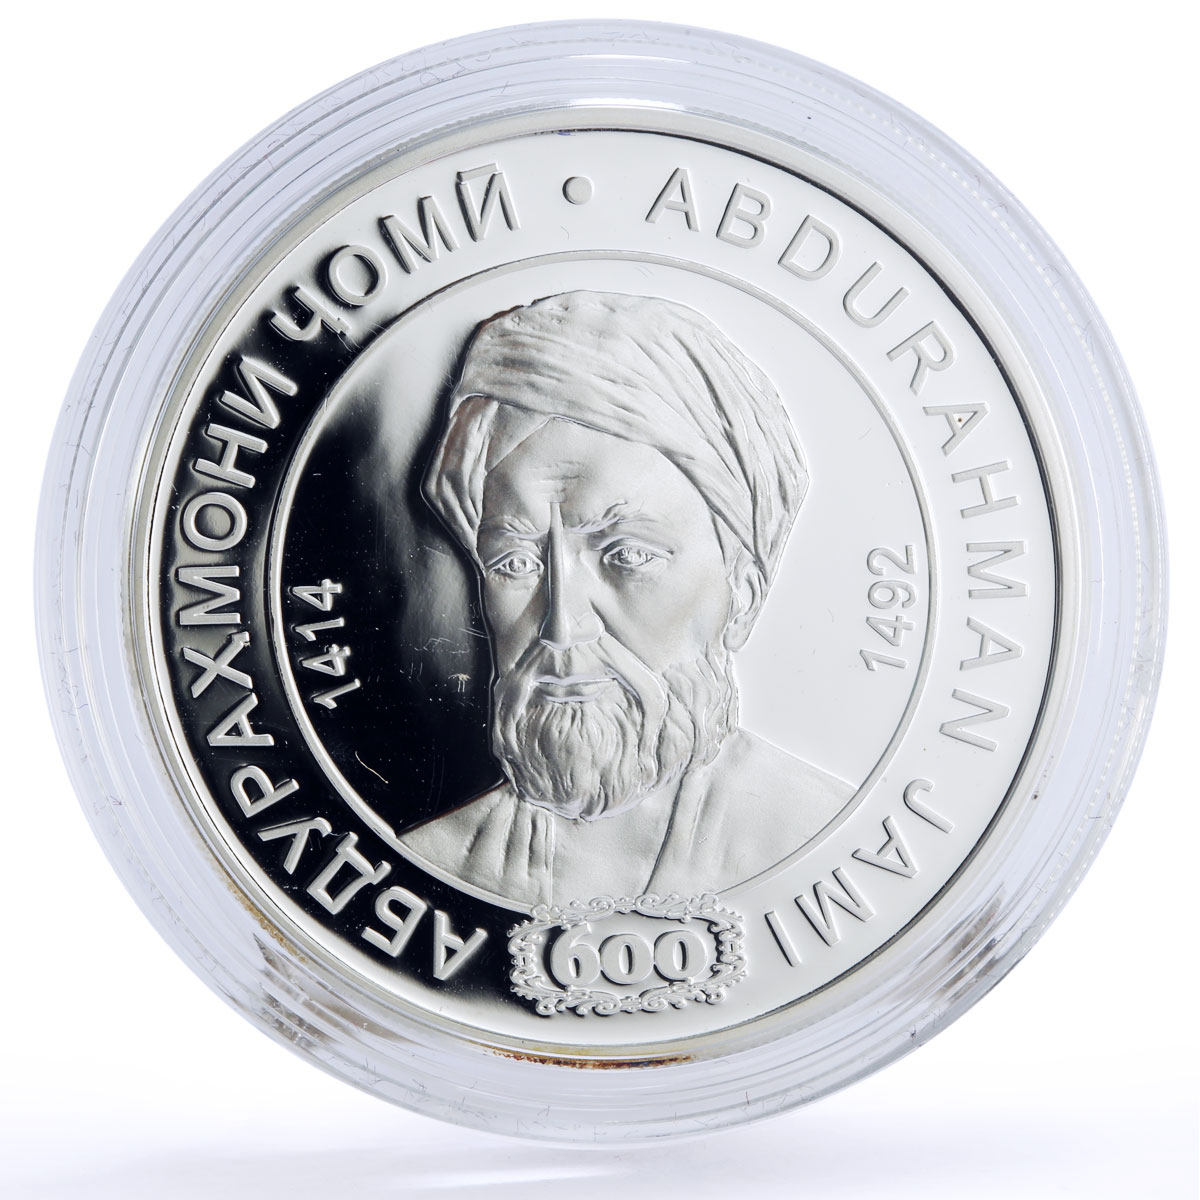 Tajikistan 500 somoni Poet Abdurahman Jami Poetry Literature silver coin 2014